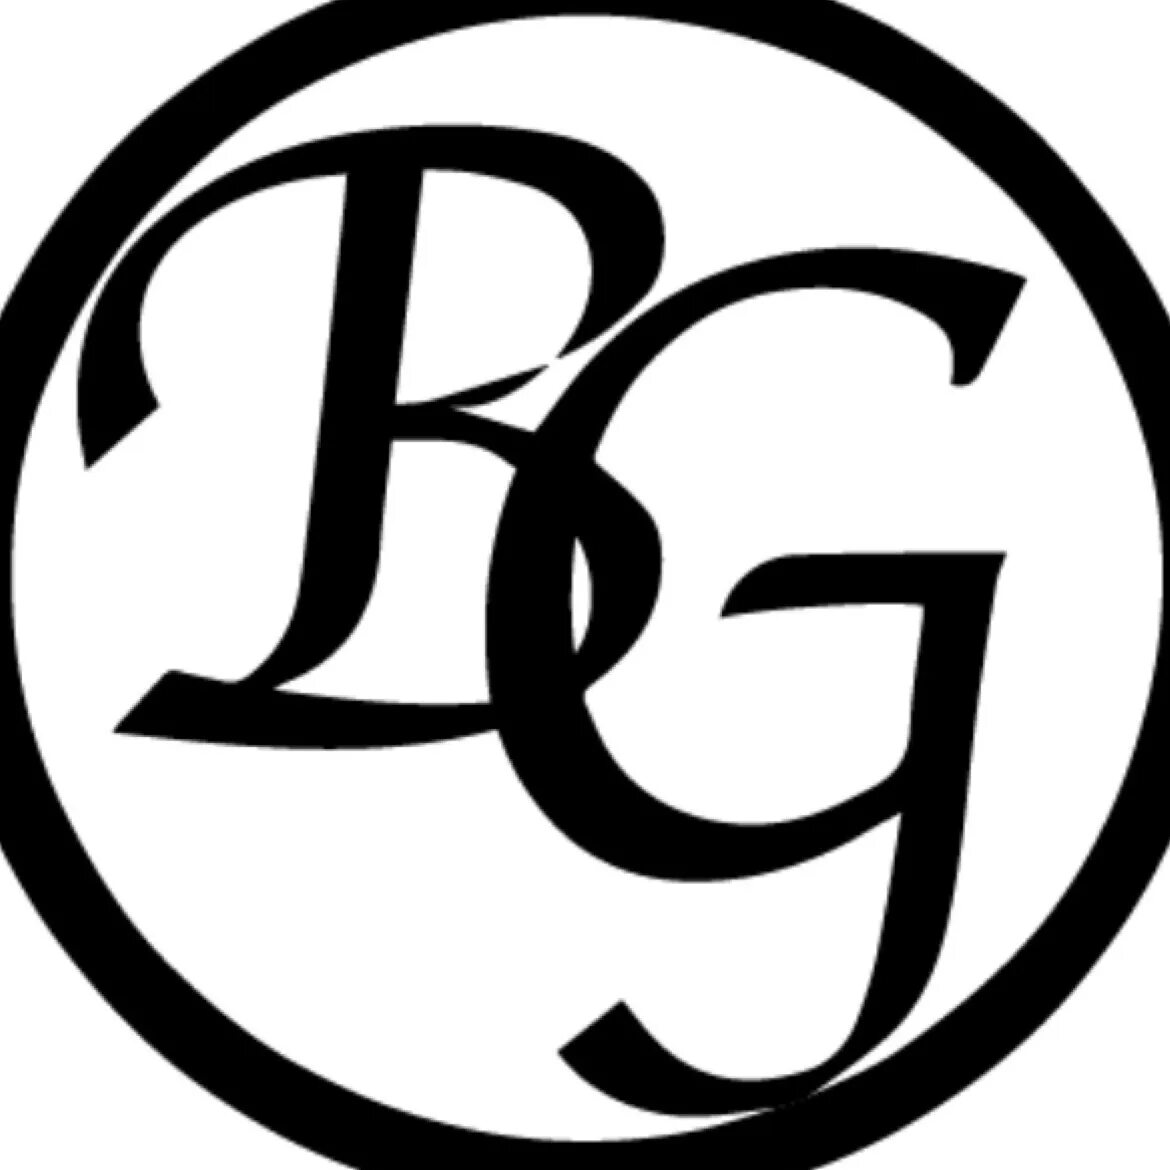 Г b. Bg логотип. Логотип буквы bg. Логотип с г б. Логотип буква g в круге.